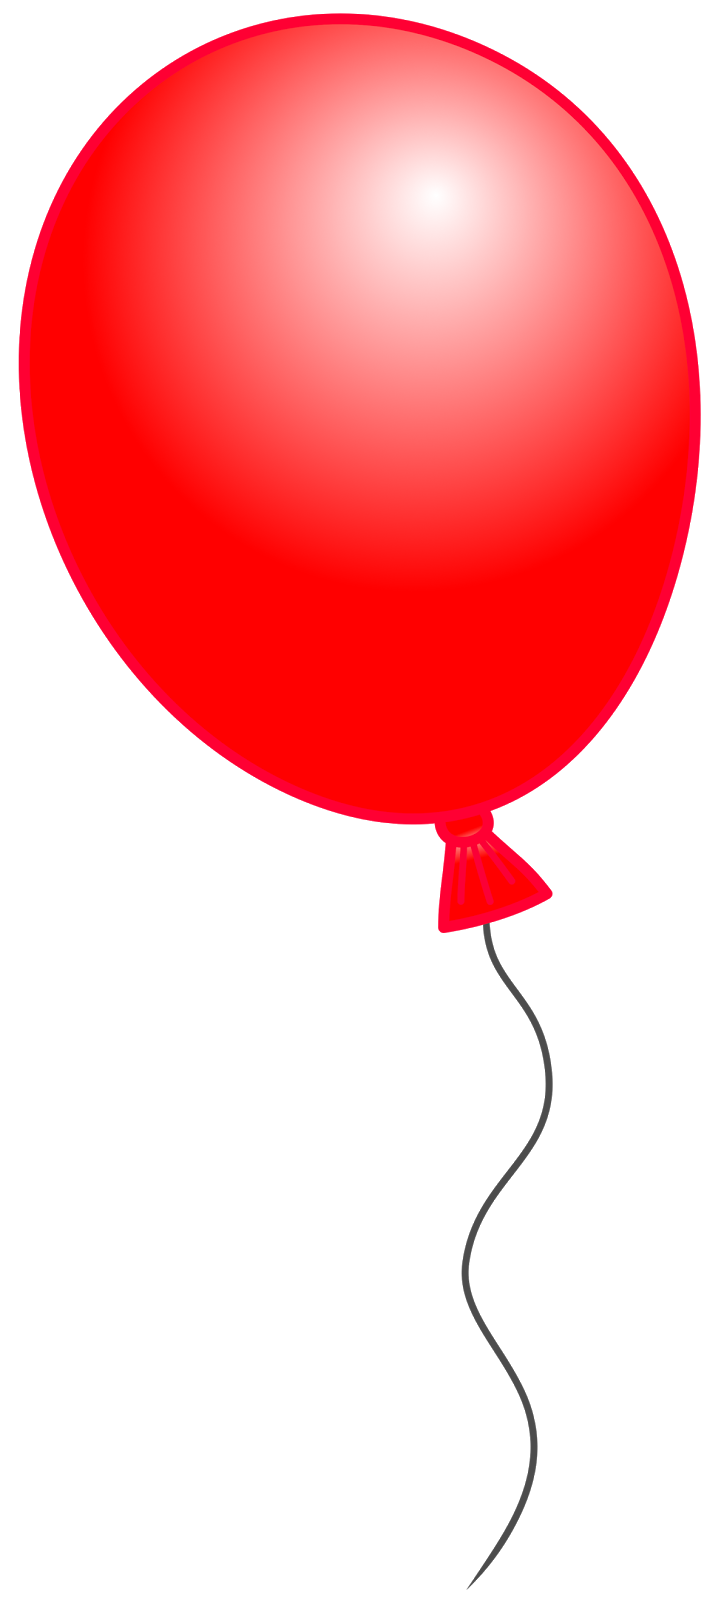 Red balloon clip art clipart